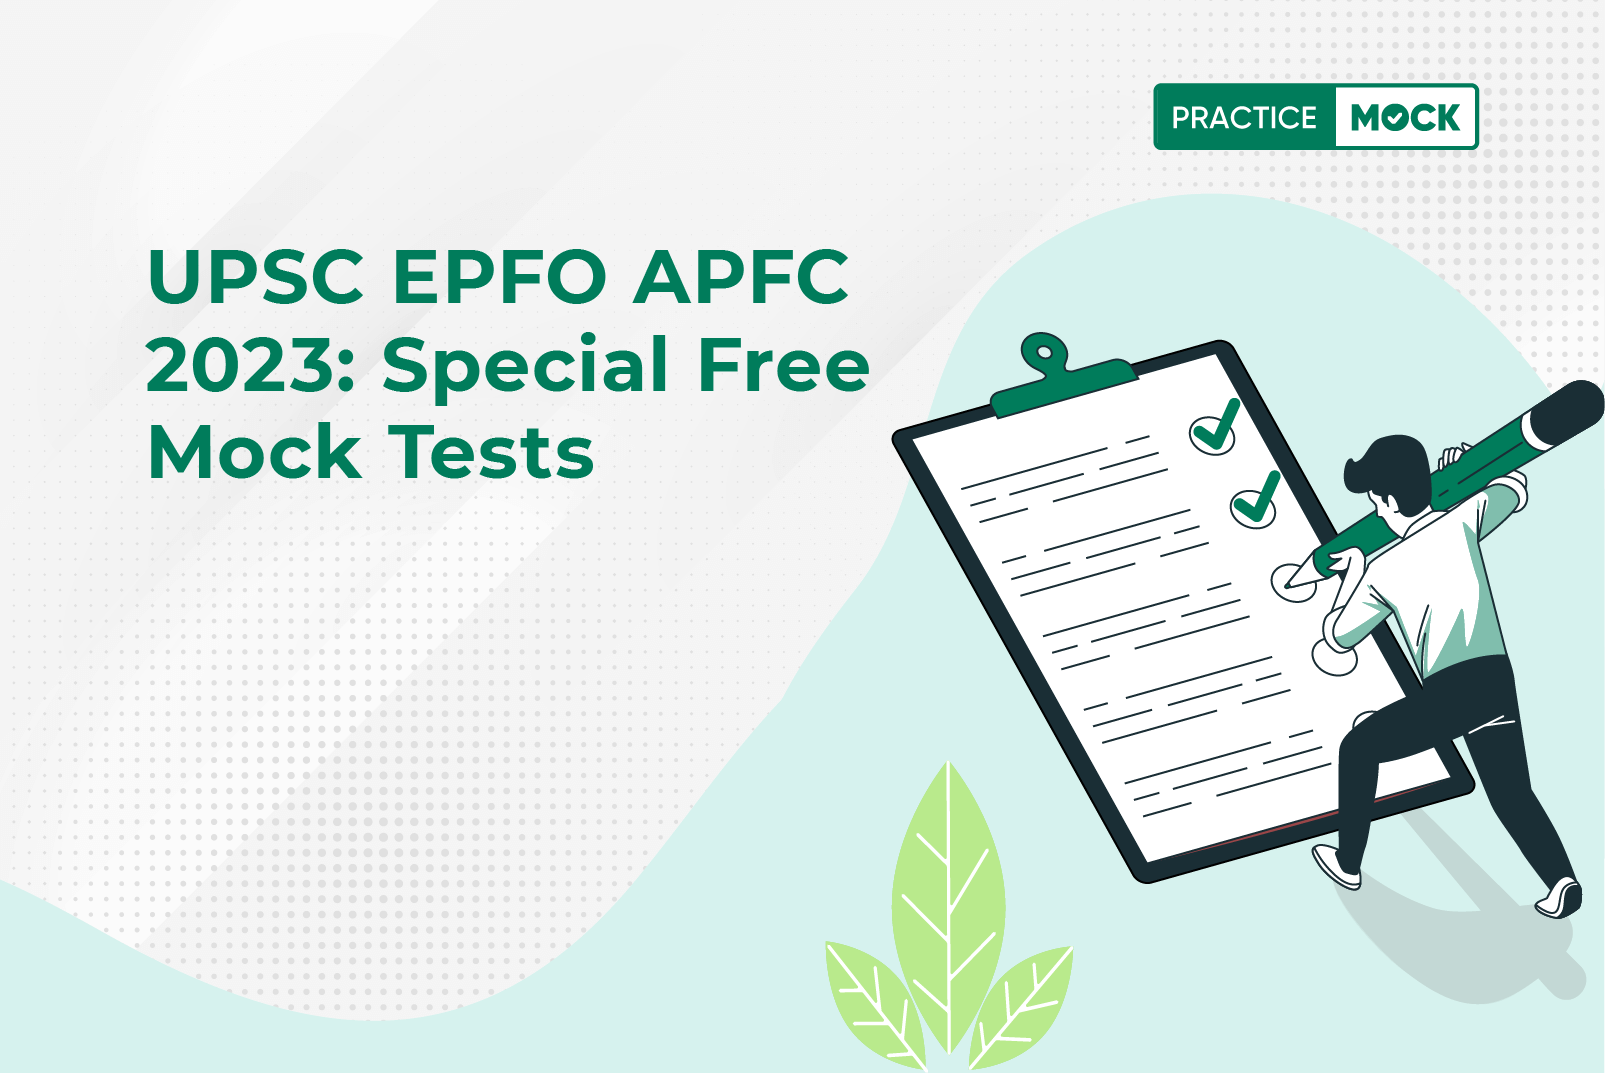 FI_UPSC_EPFO_APFC_Mock_Test_070623 (1)